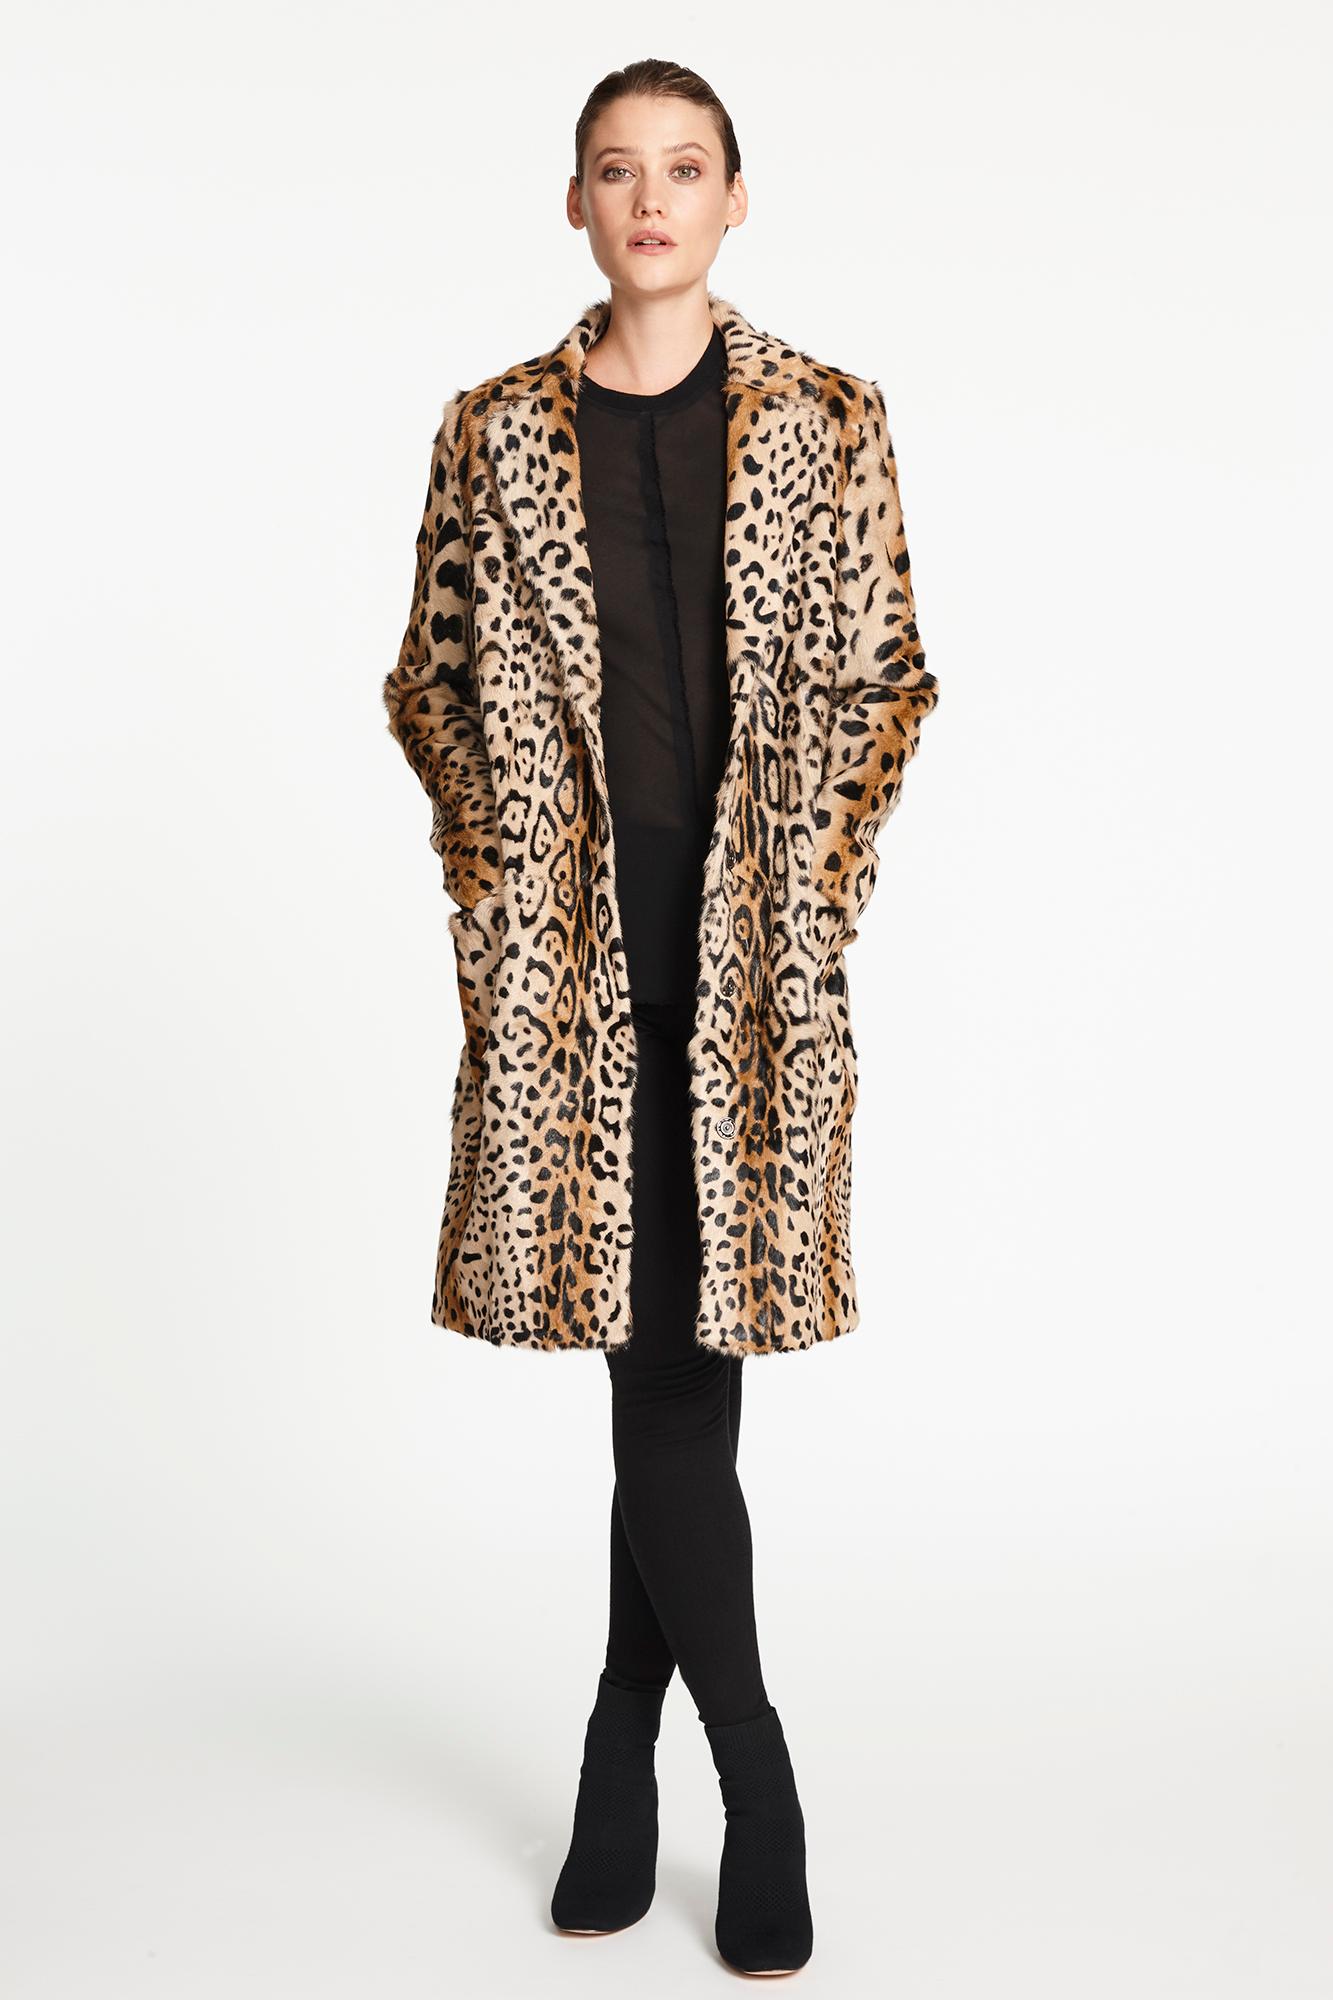 Women's Verheyen London Leopard Print Coat in Red Ruby Goat Hair Fur UK 12  - Brand New 